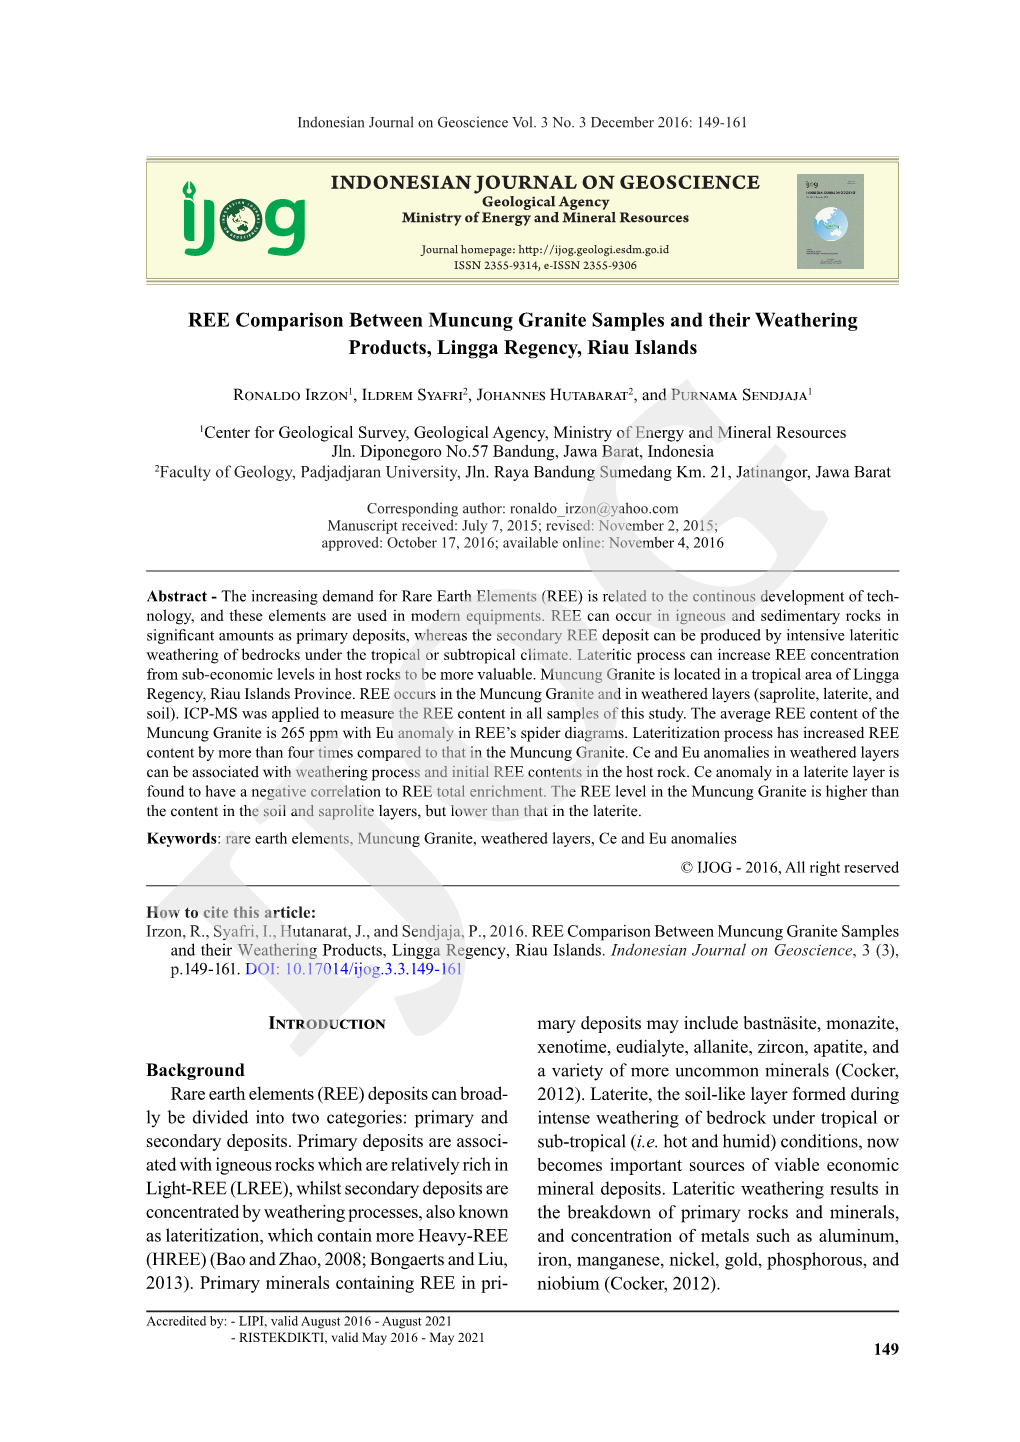 INDONESIAN JOURNAL on GEOSCIENCE REE Comparison Between Muncung Granite Samples and Their Weathering Products, Lingga Regency, R